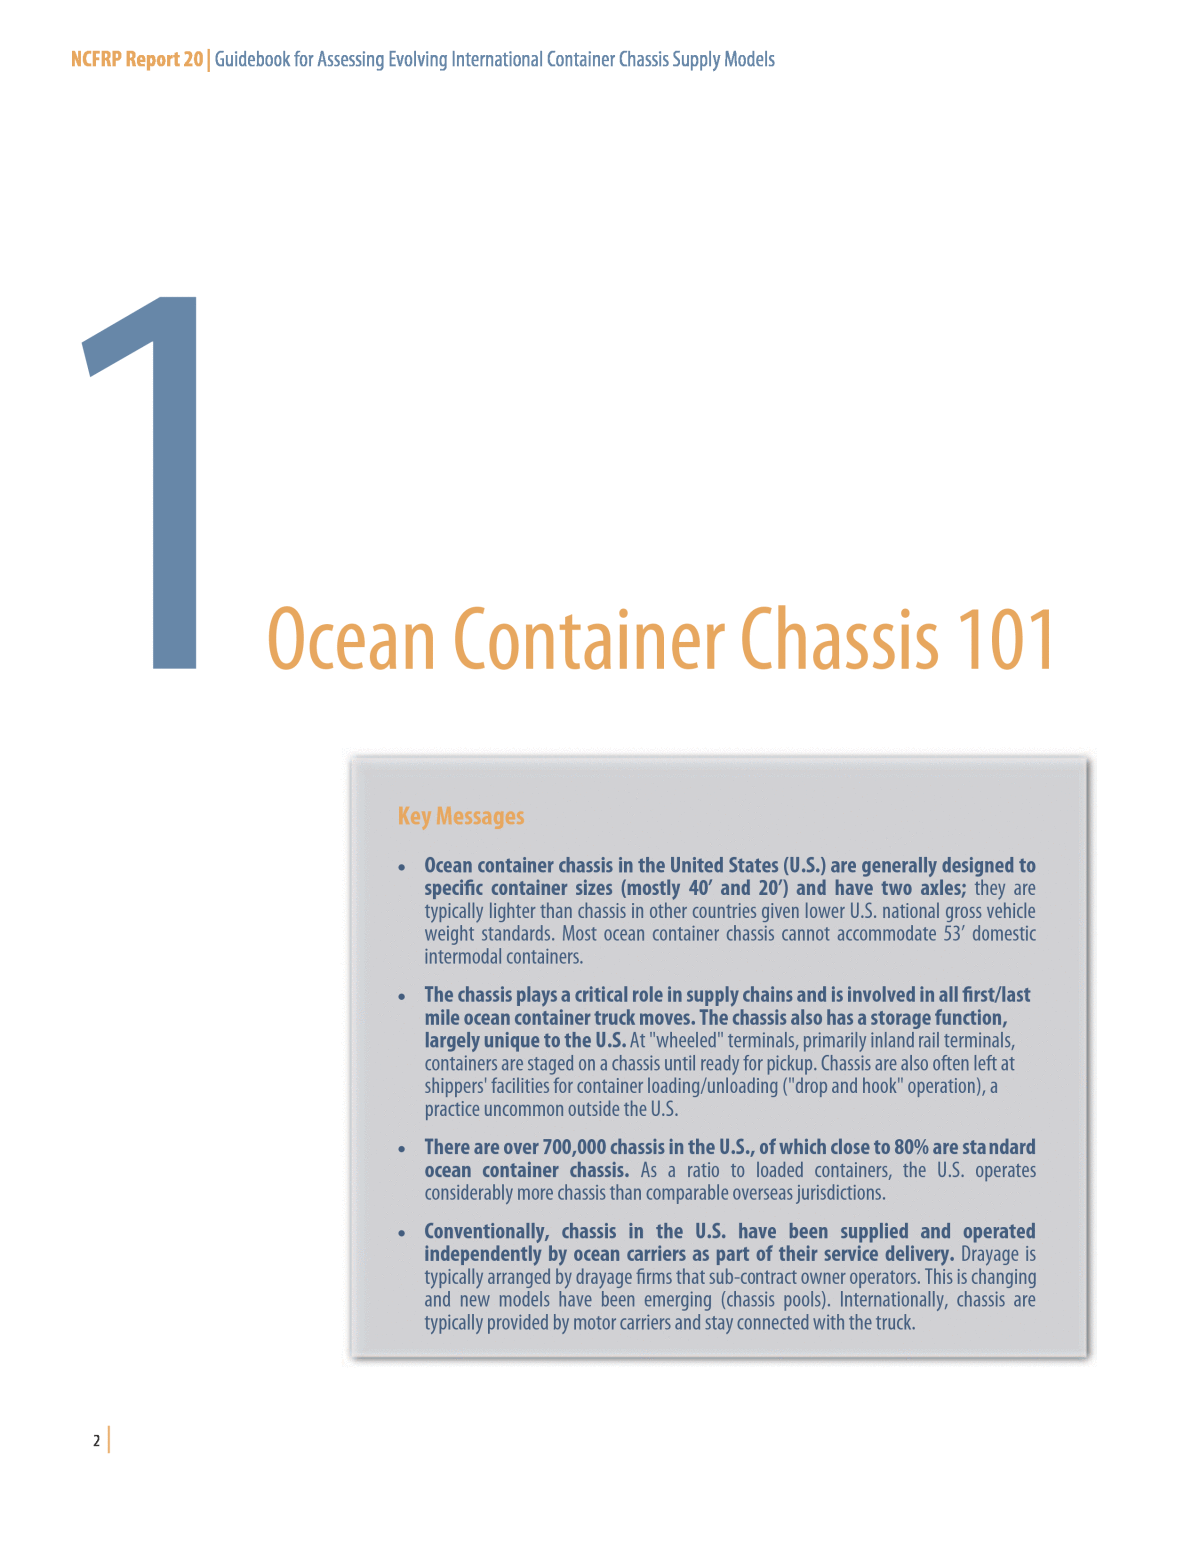 ocean carriers case